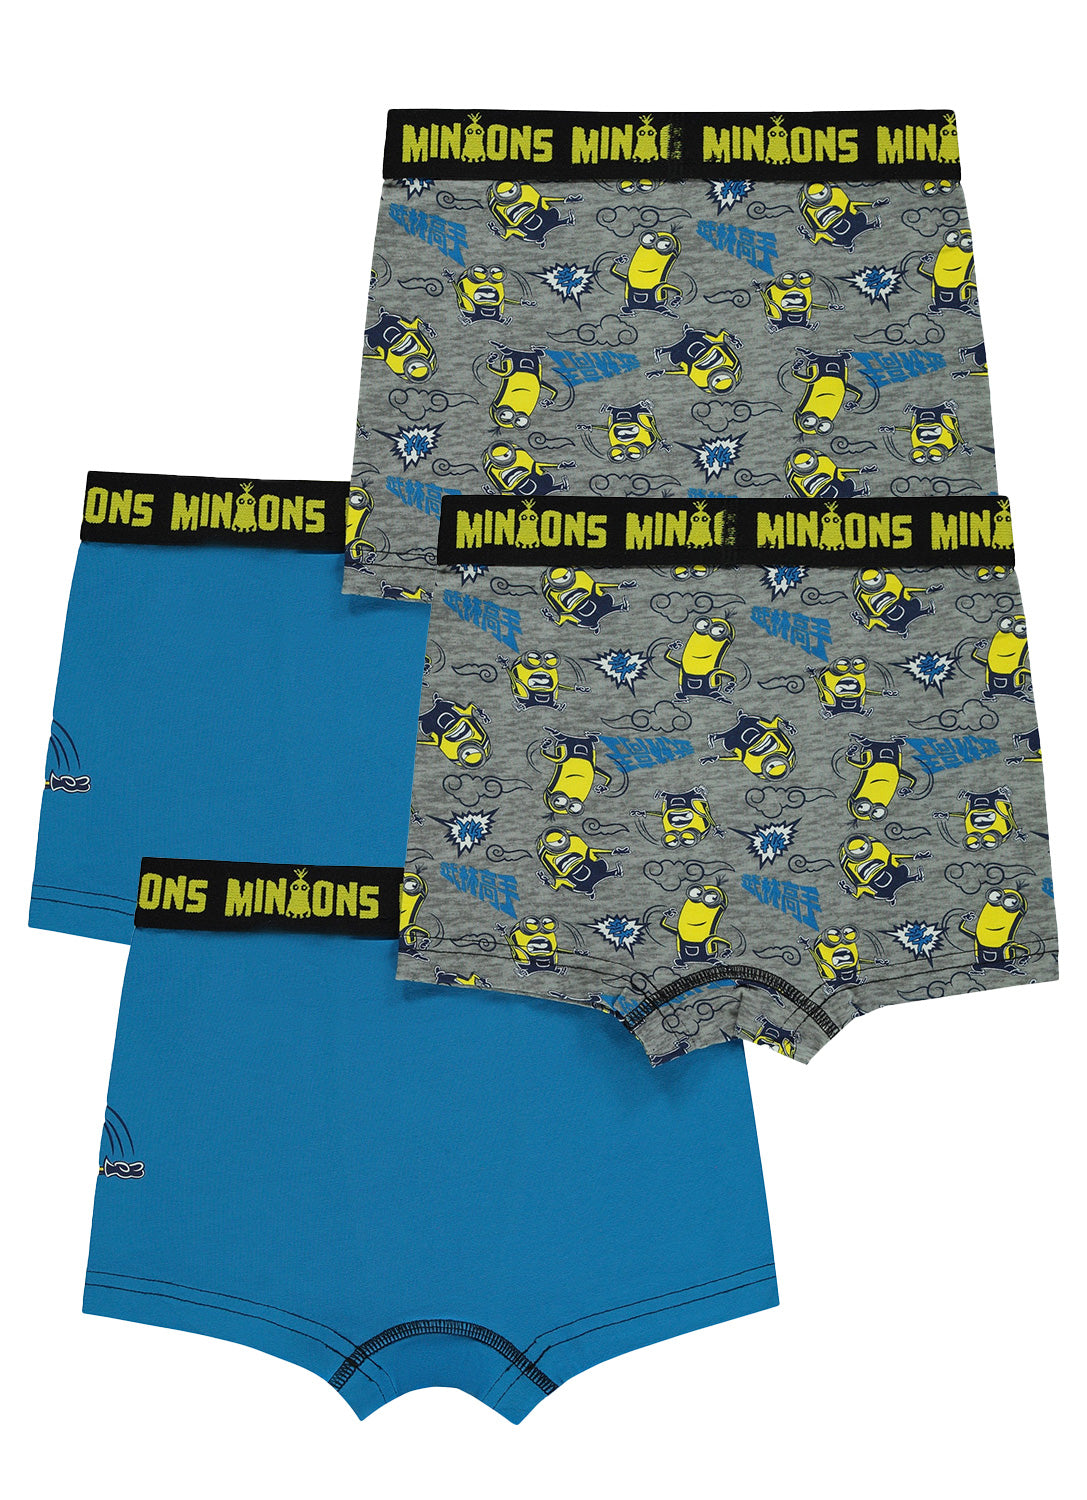 Boys Minions 2 Cotton Underwear - 4 Pack